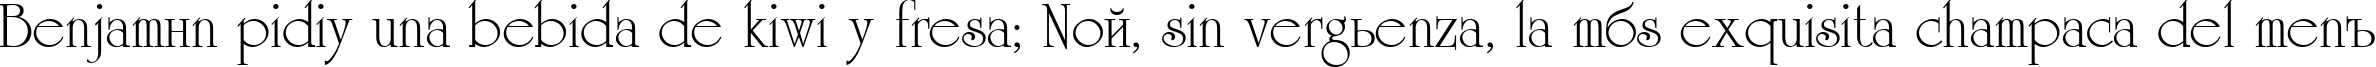 Пример написания шрифтом UniCyrillic текста на испанском